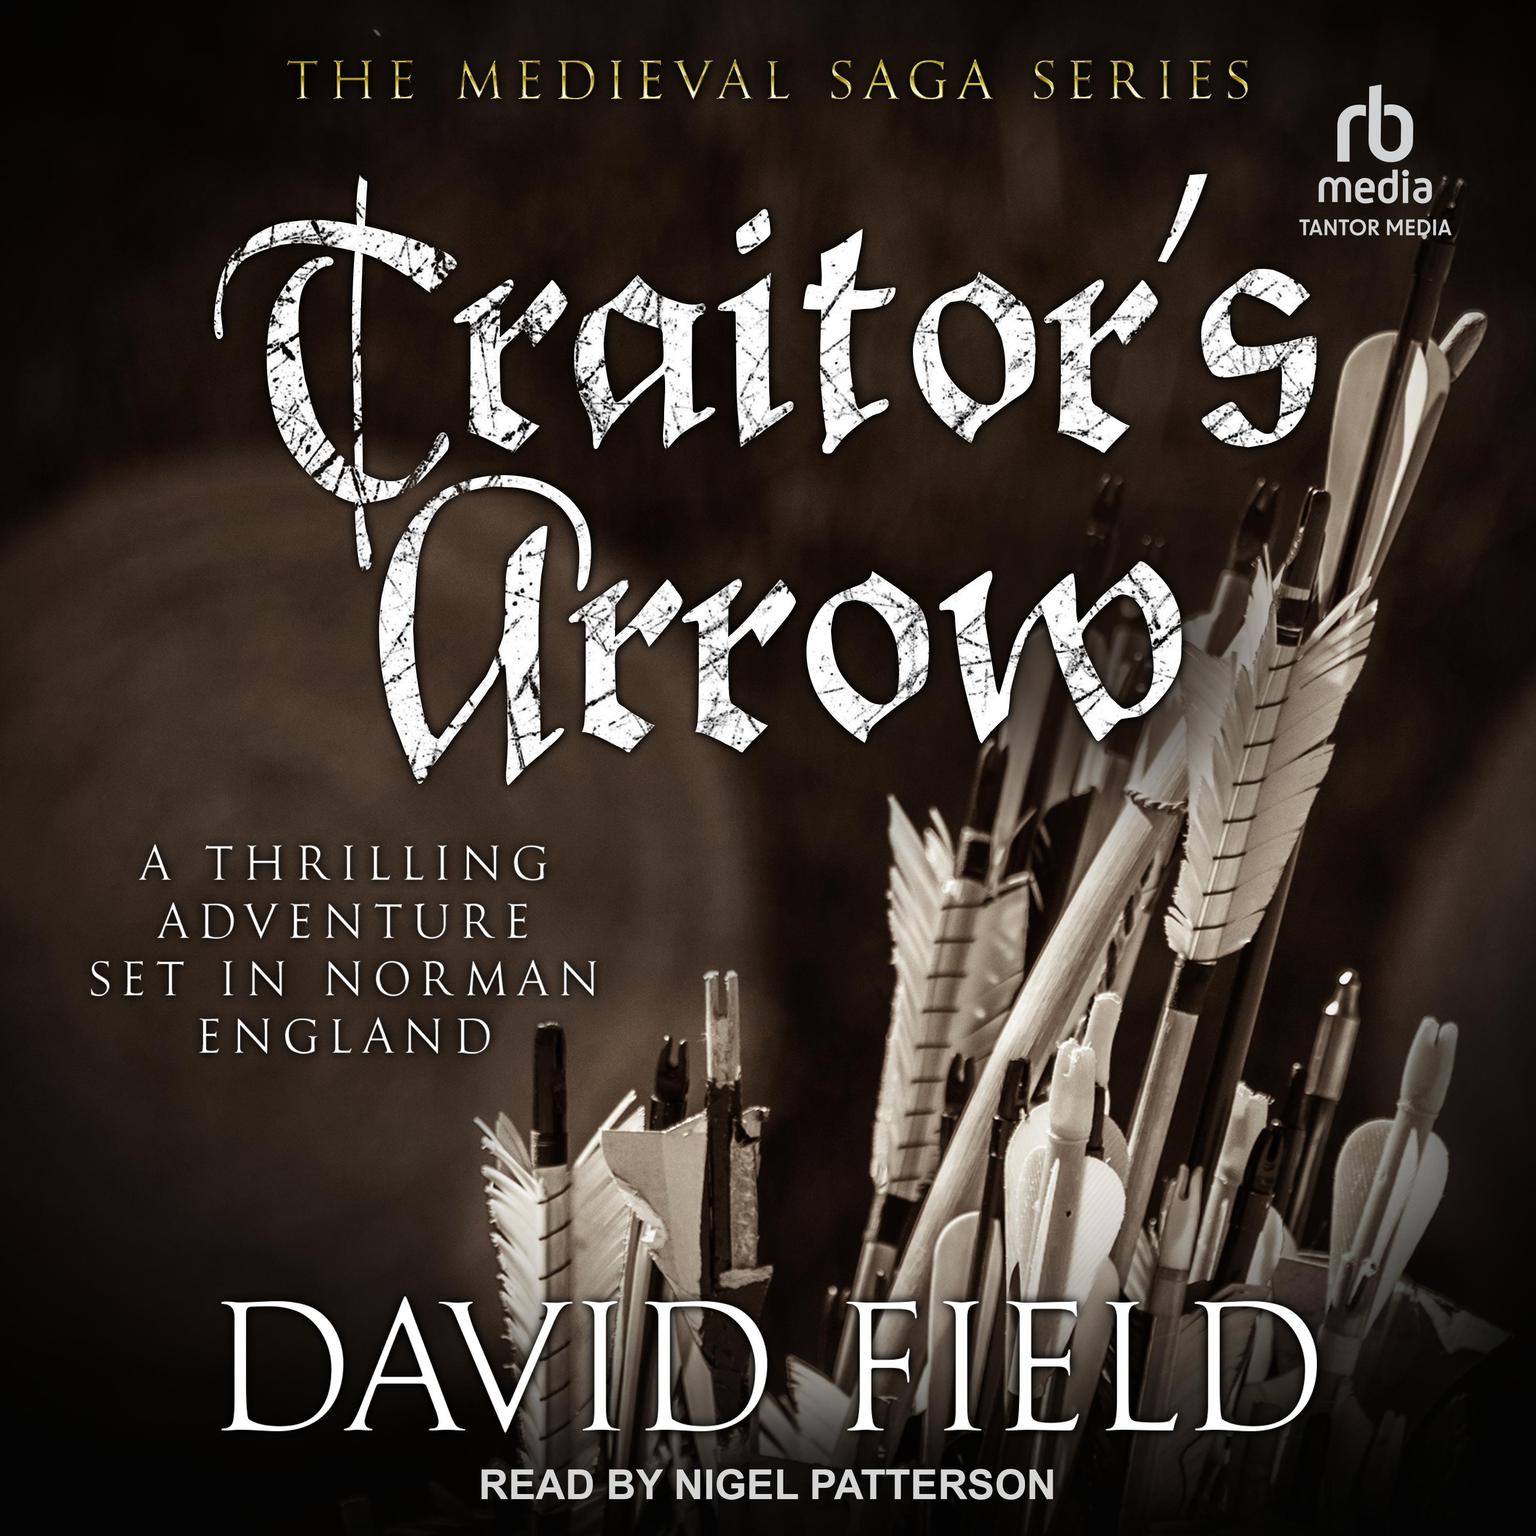 Traitors Arrow Audiobook, by David Field